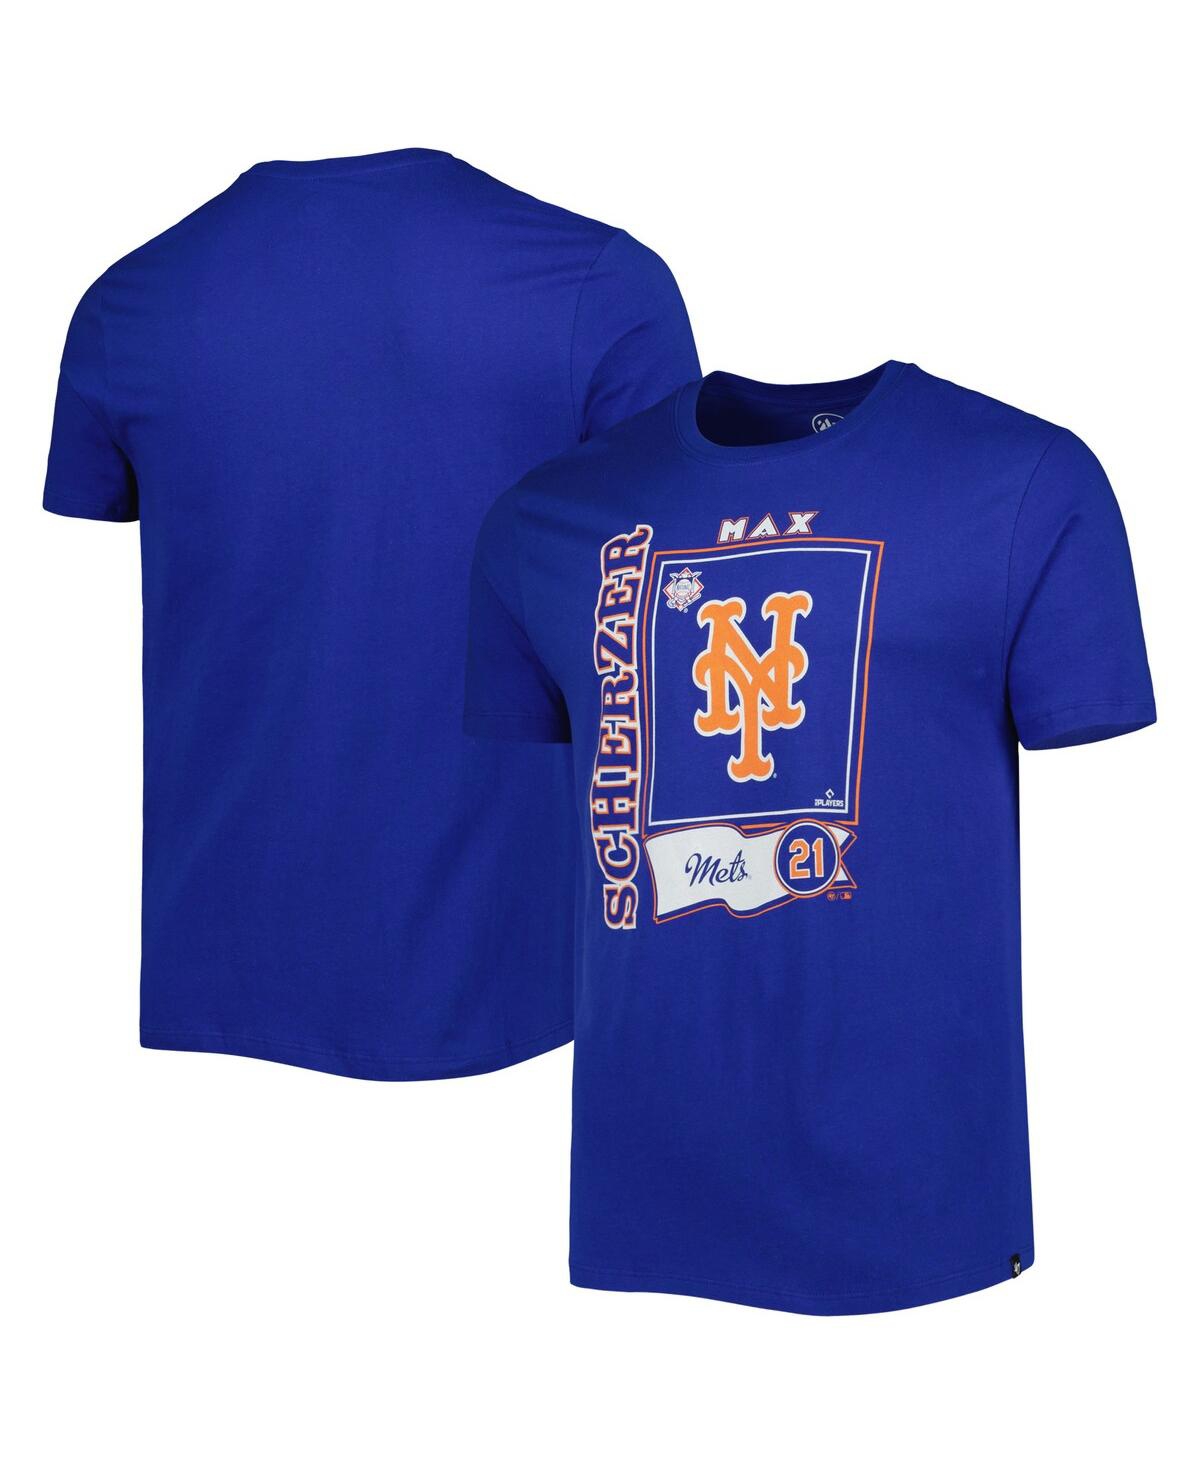 47 Brand Men's '47 Max Scherzer Royal New York Mets Super Rival Player T-shirt